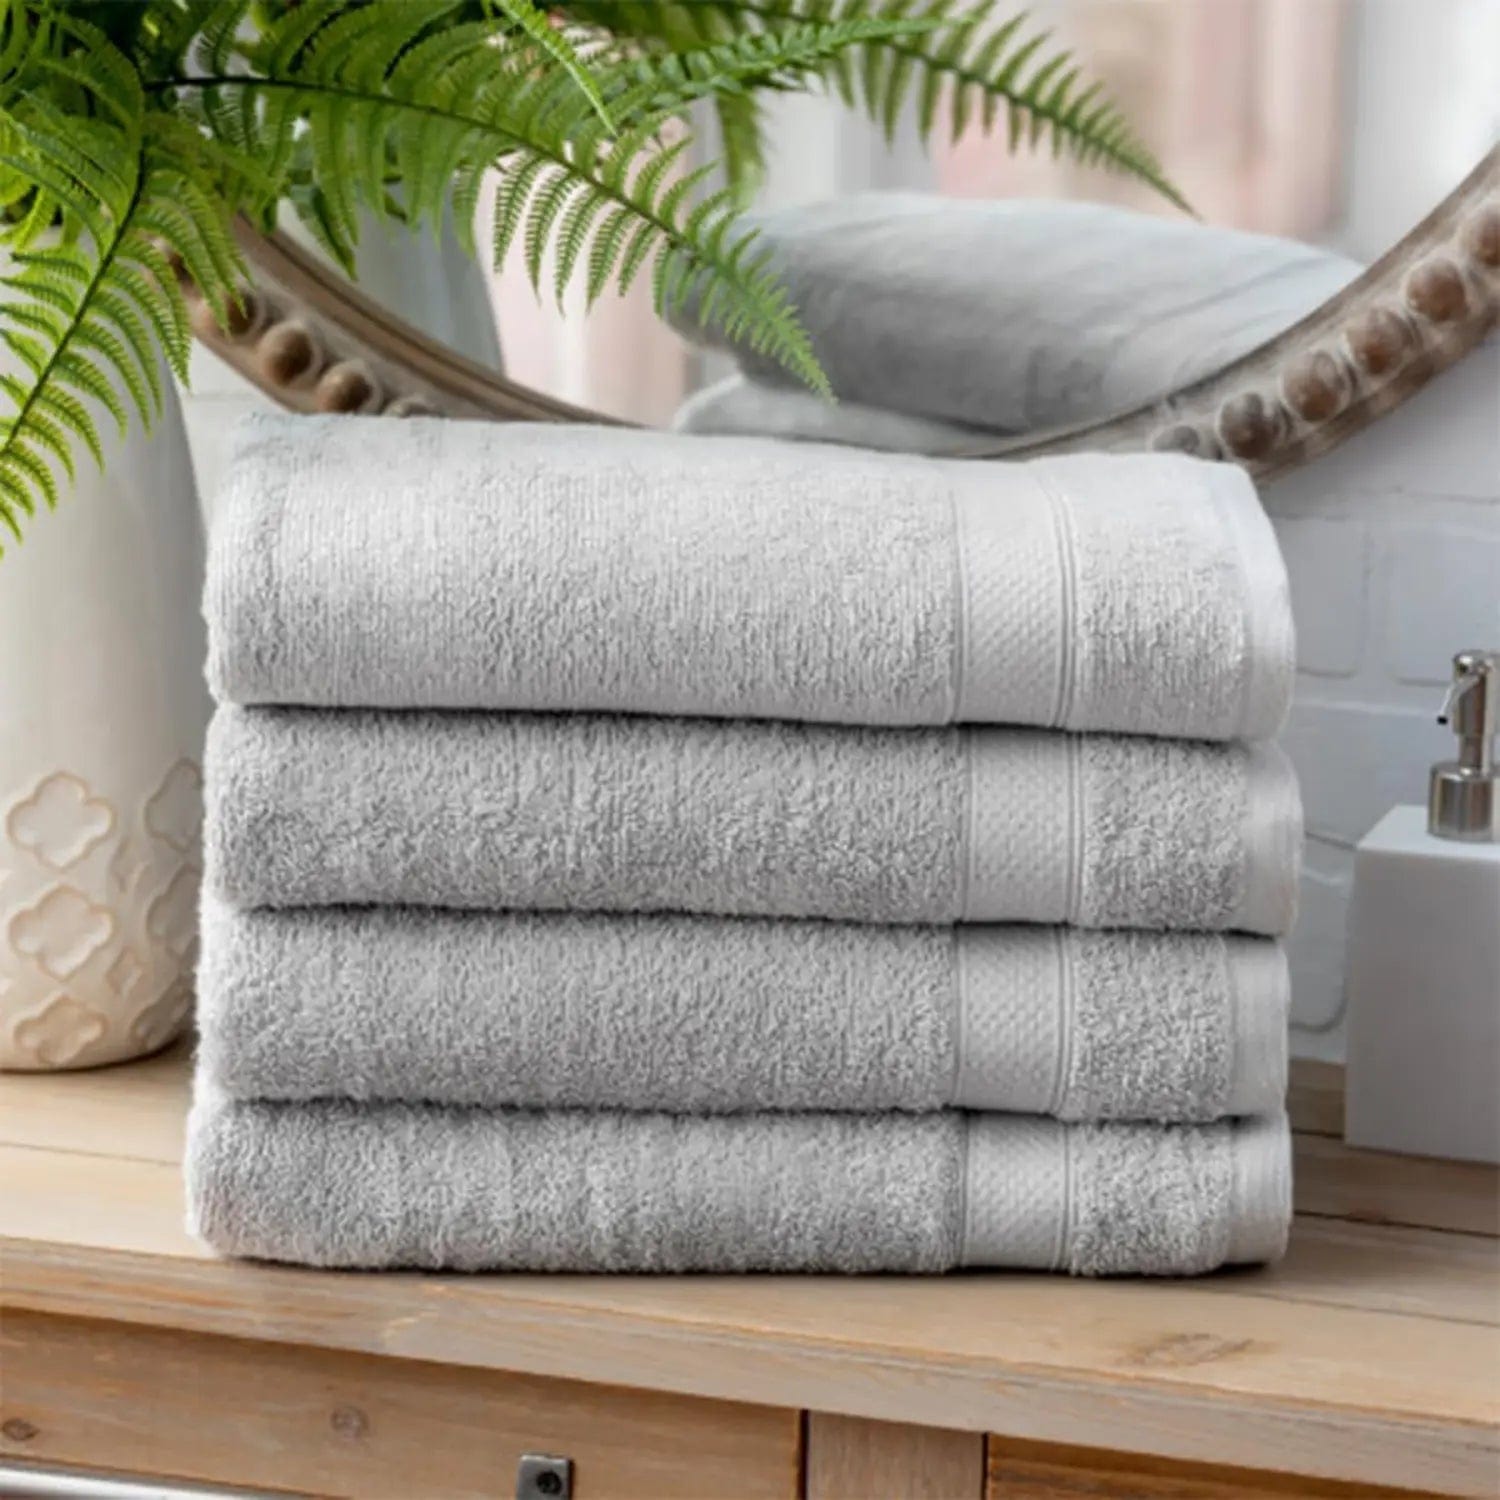 4 silver grey towels on a bathroom dresser with mirror and fern plant